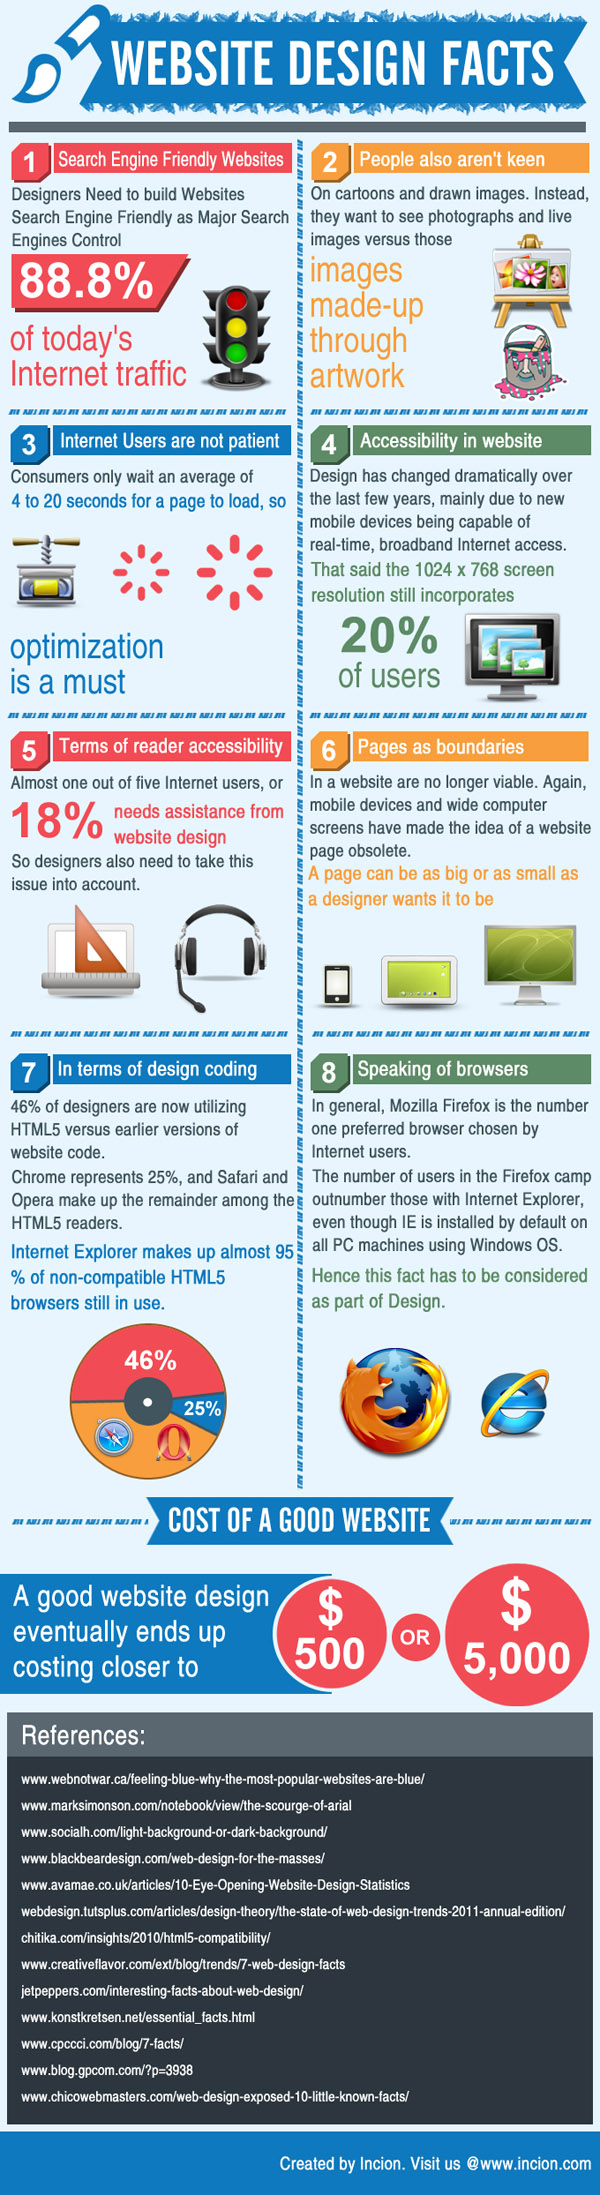 infographic website